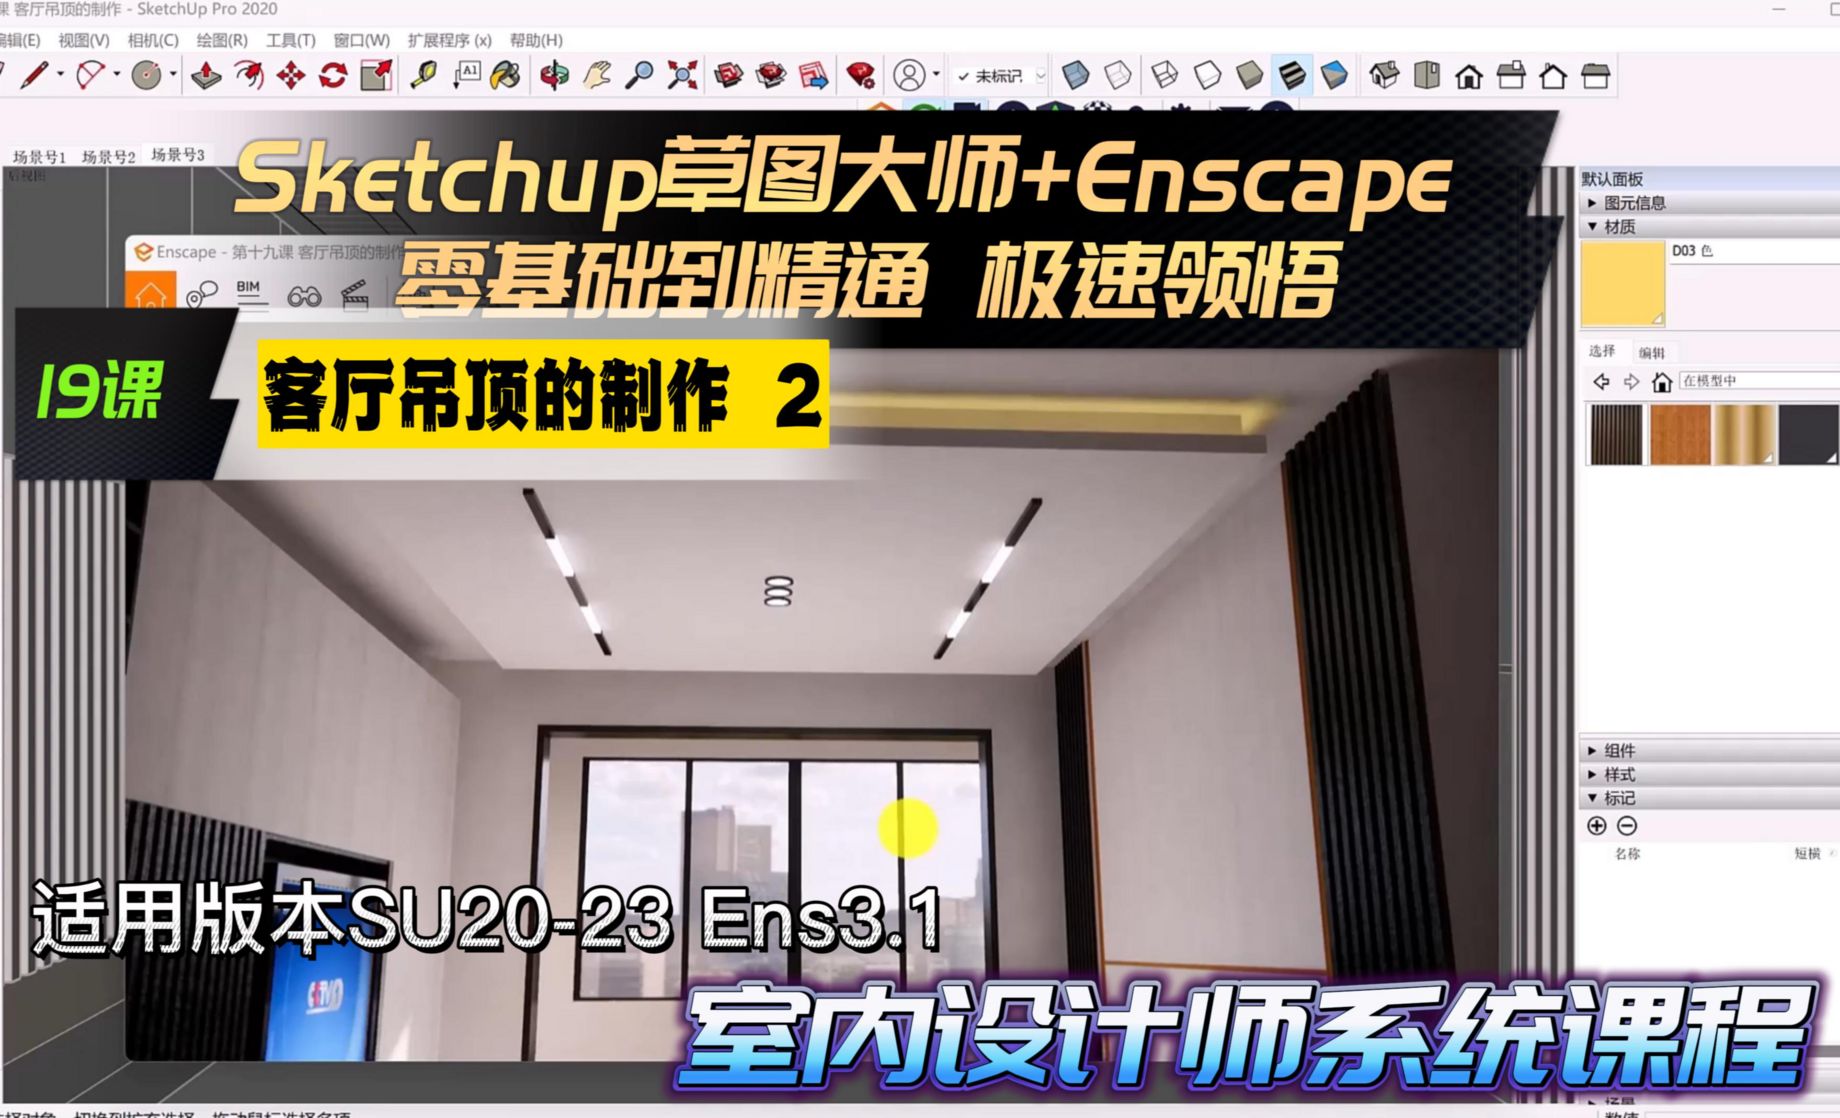 Sketchup+Enscape室内设计极速领悟-客厅吊顶的制作2